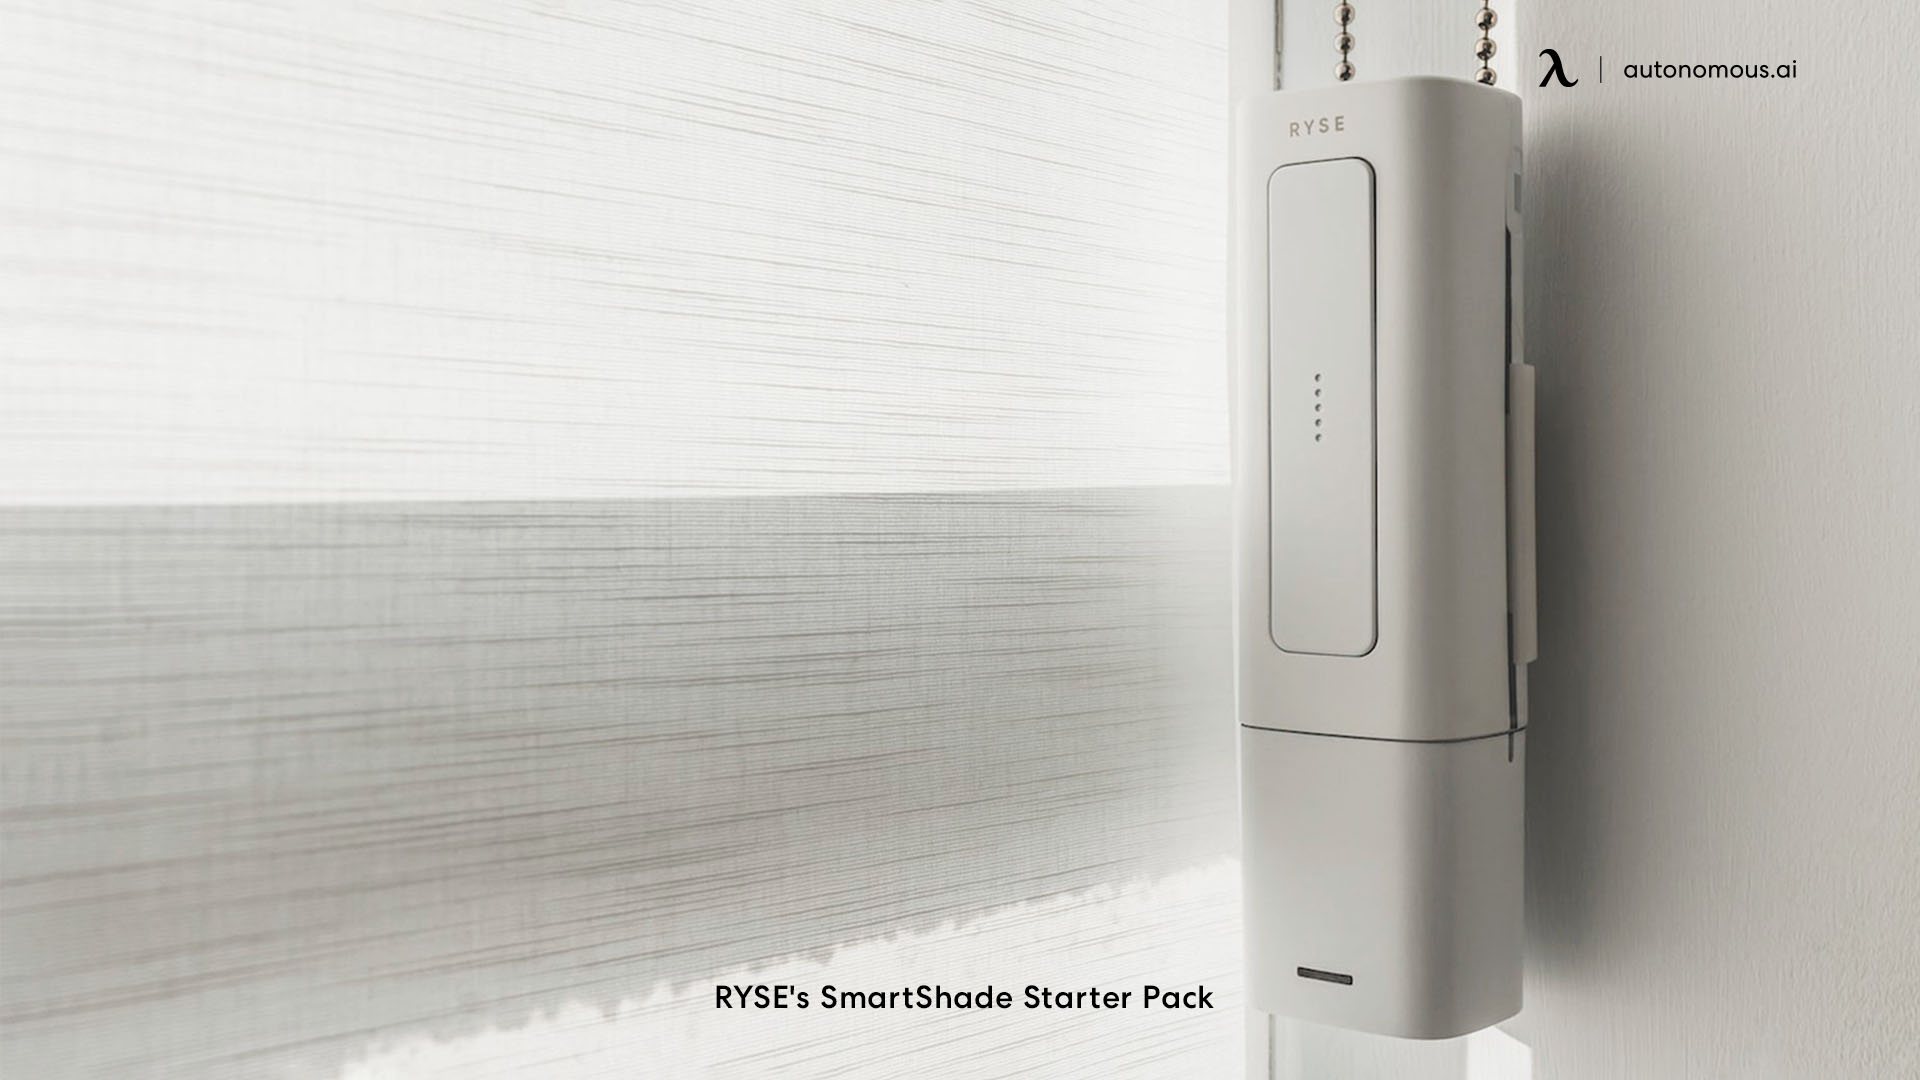 RYSE's SmartShade Starter Pack smart equipment for home